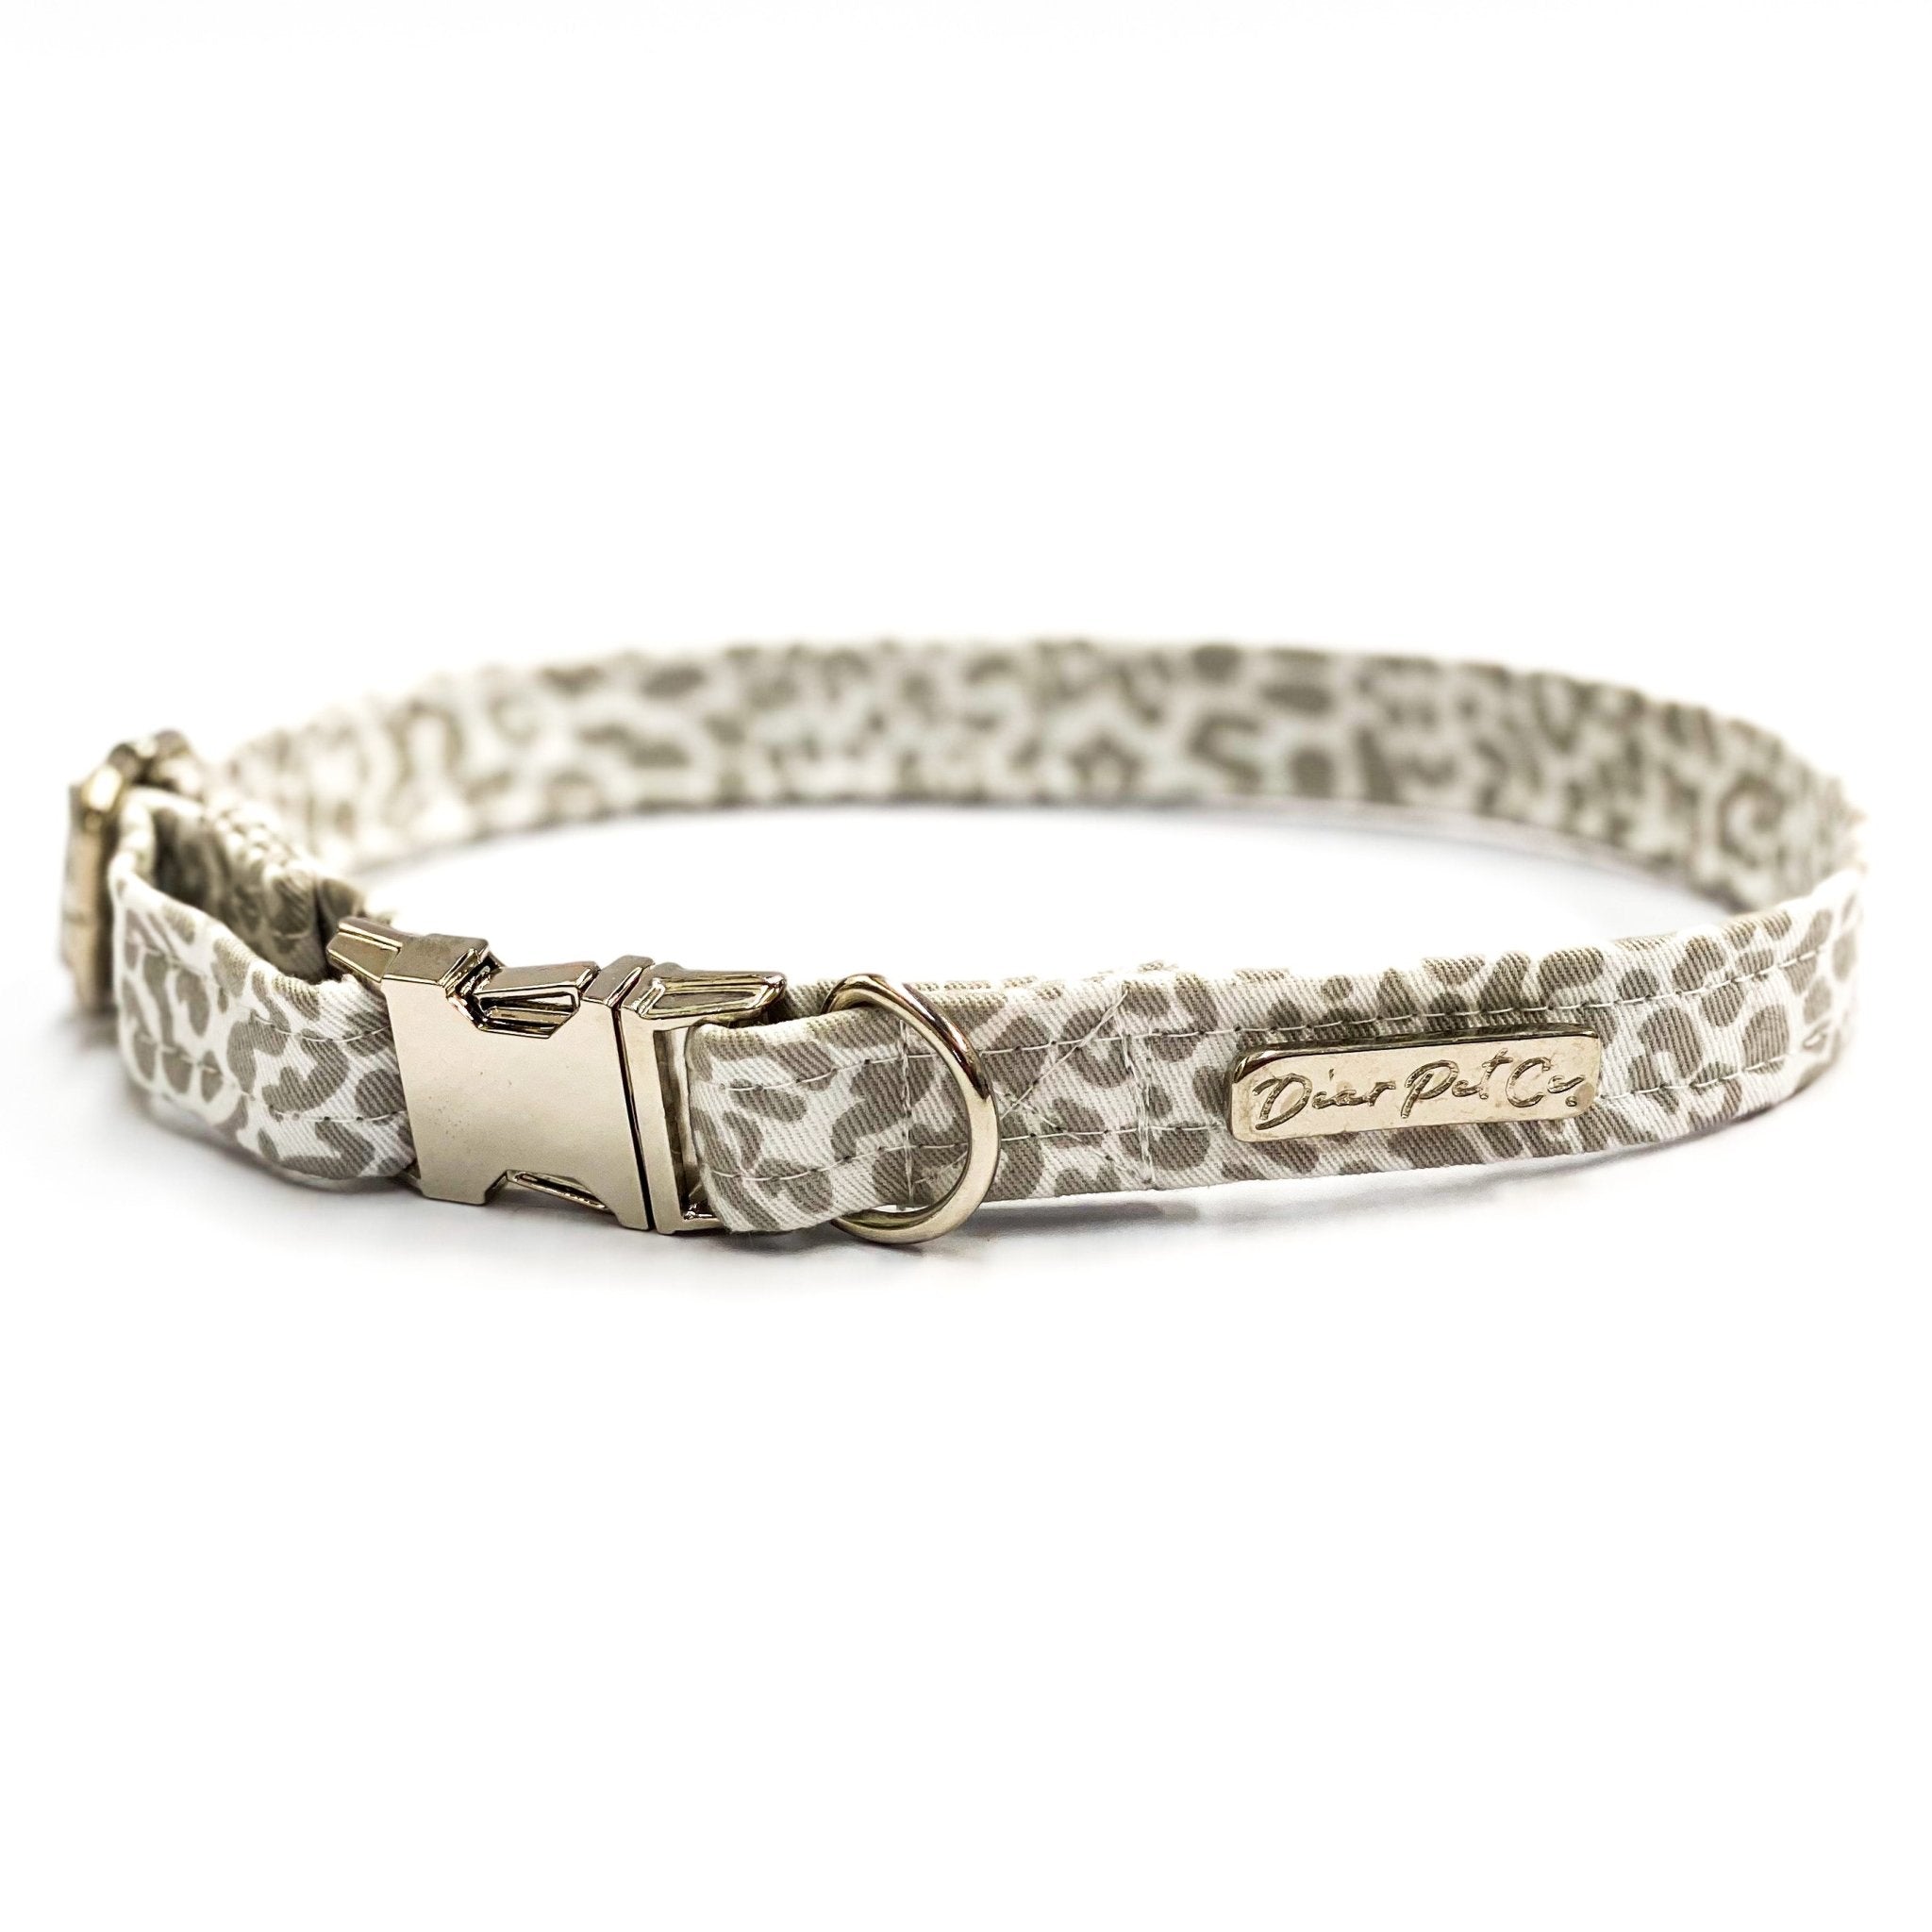 Collar | Boho Leopard - Dear Pet Company